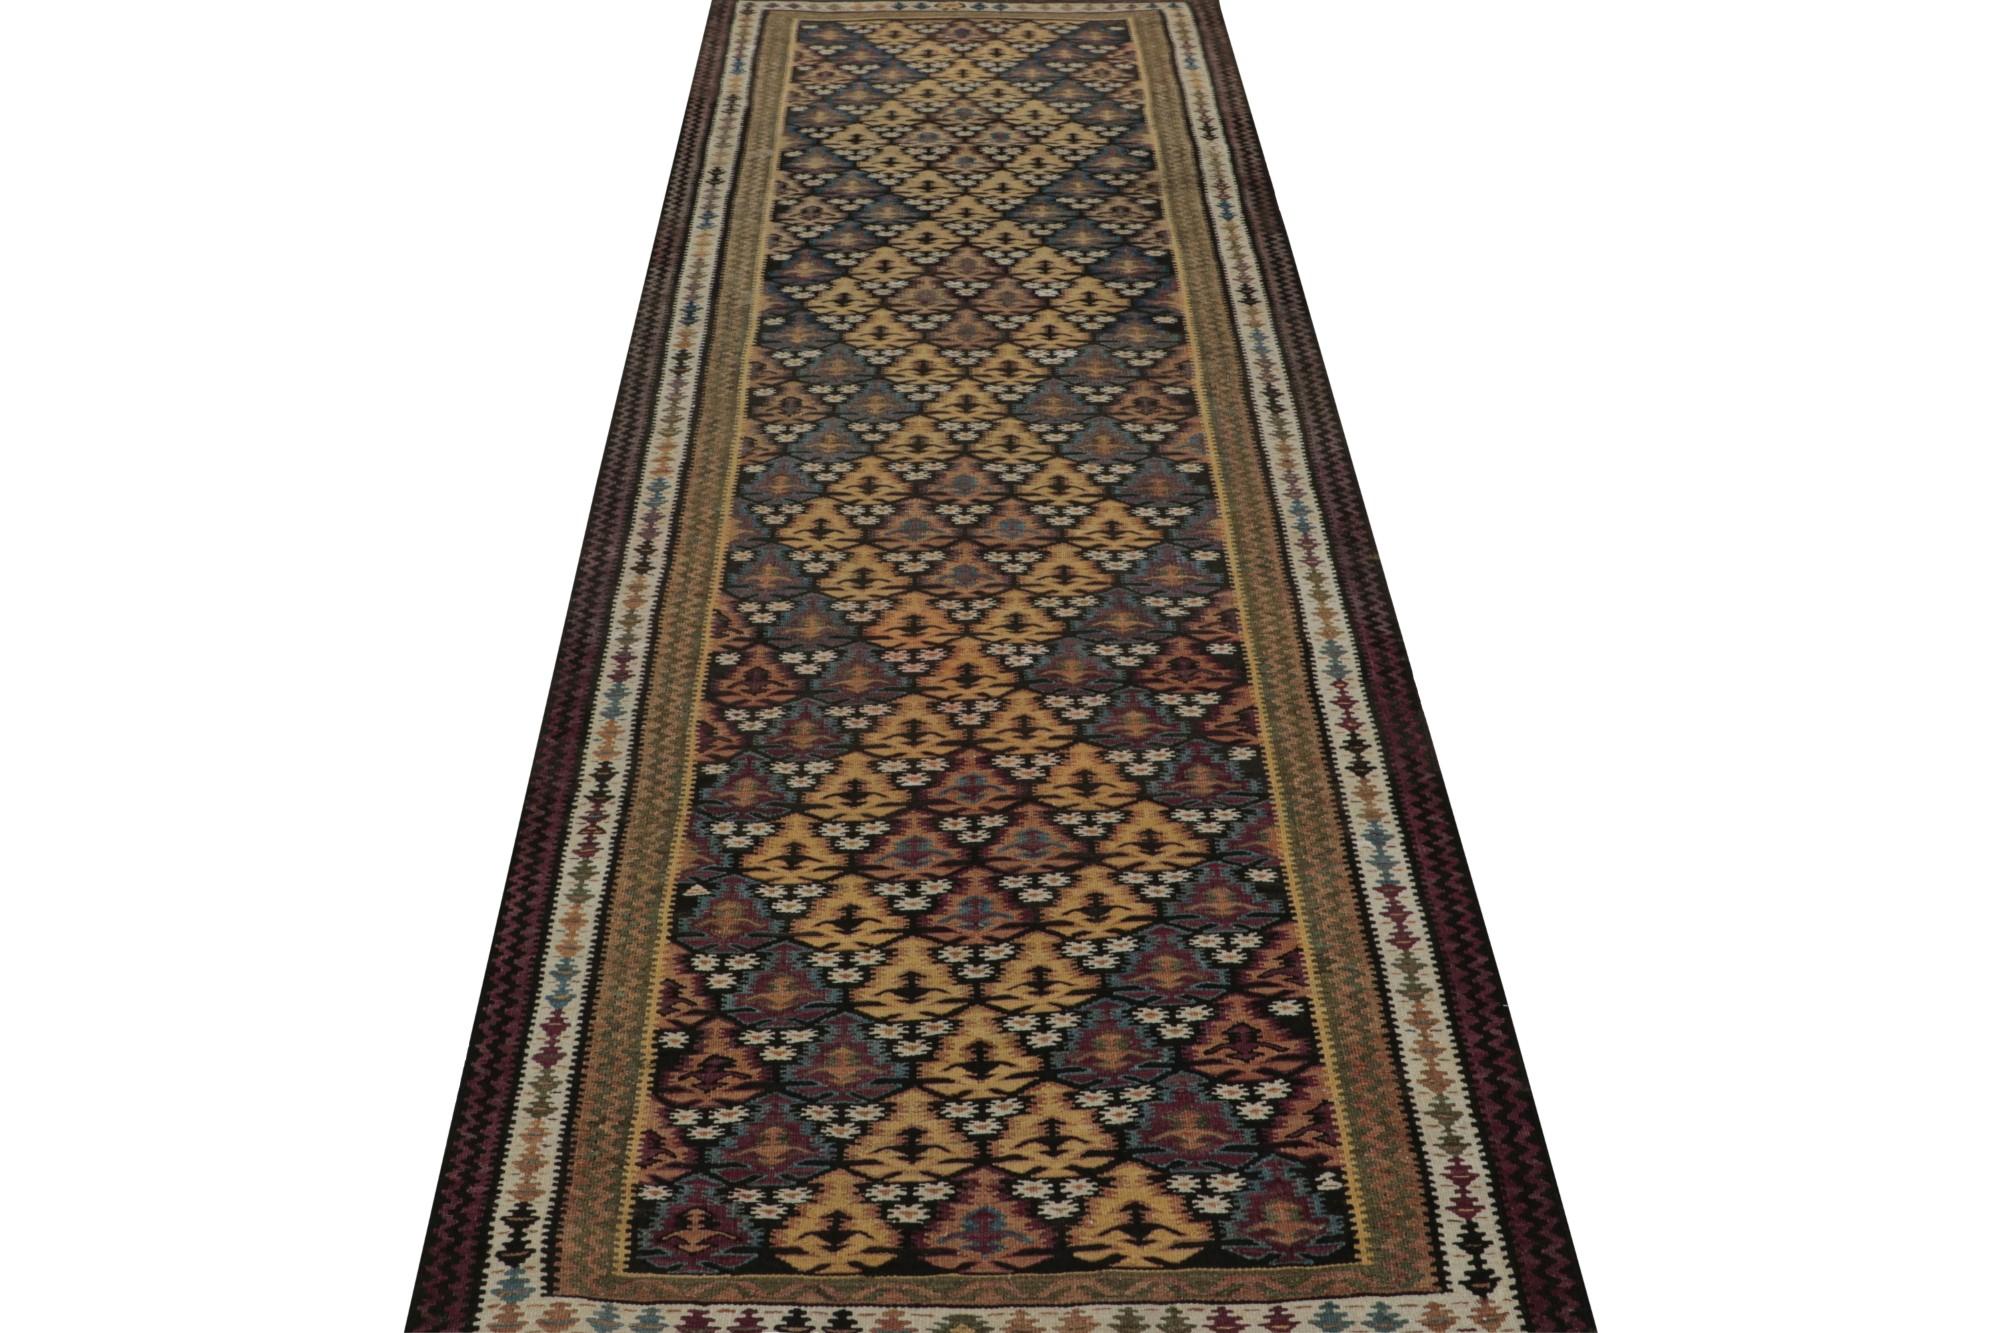 Afghan Vintage Tribal Kilim runner rug with Polychromatic Patterns by Rug & Kilim For Sale